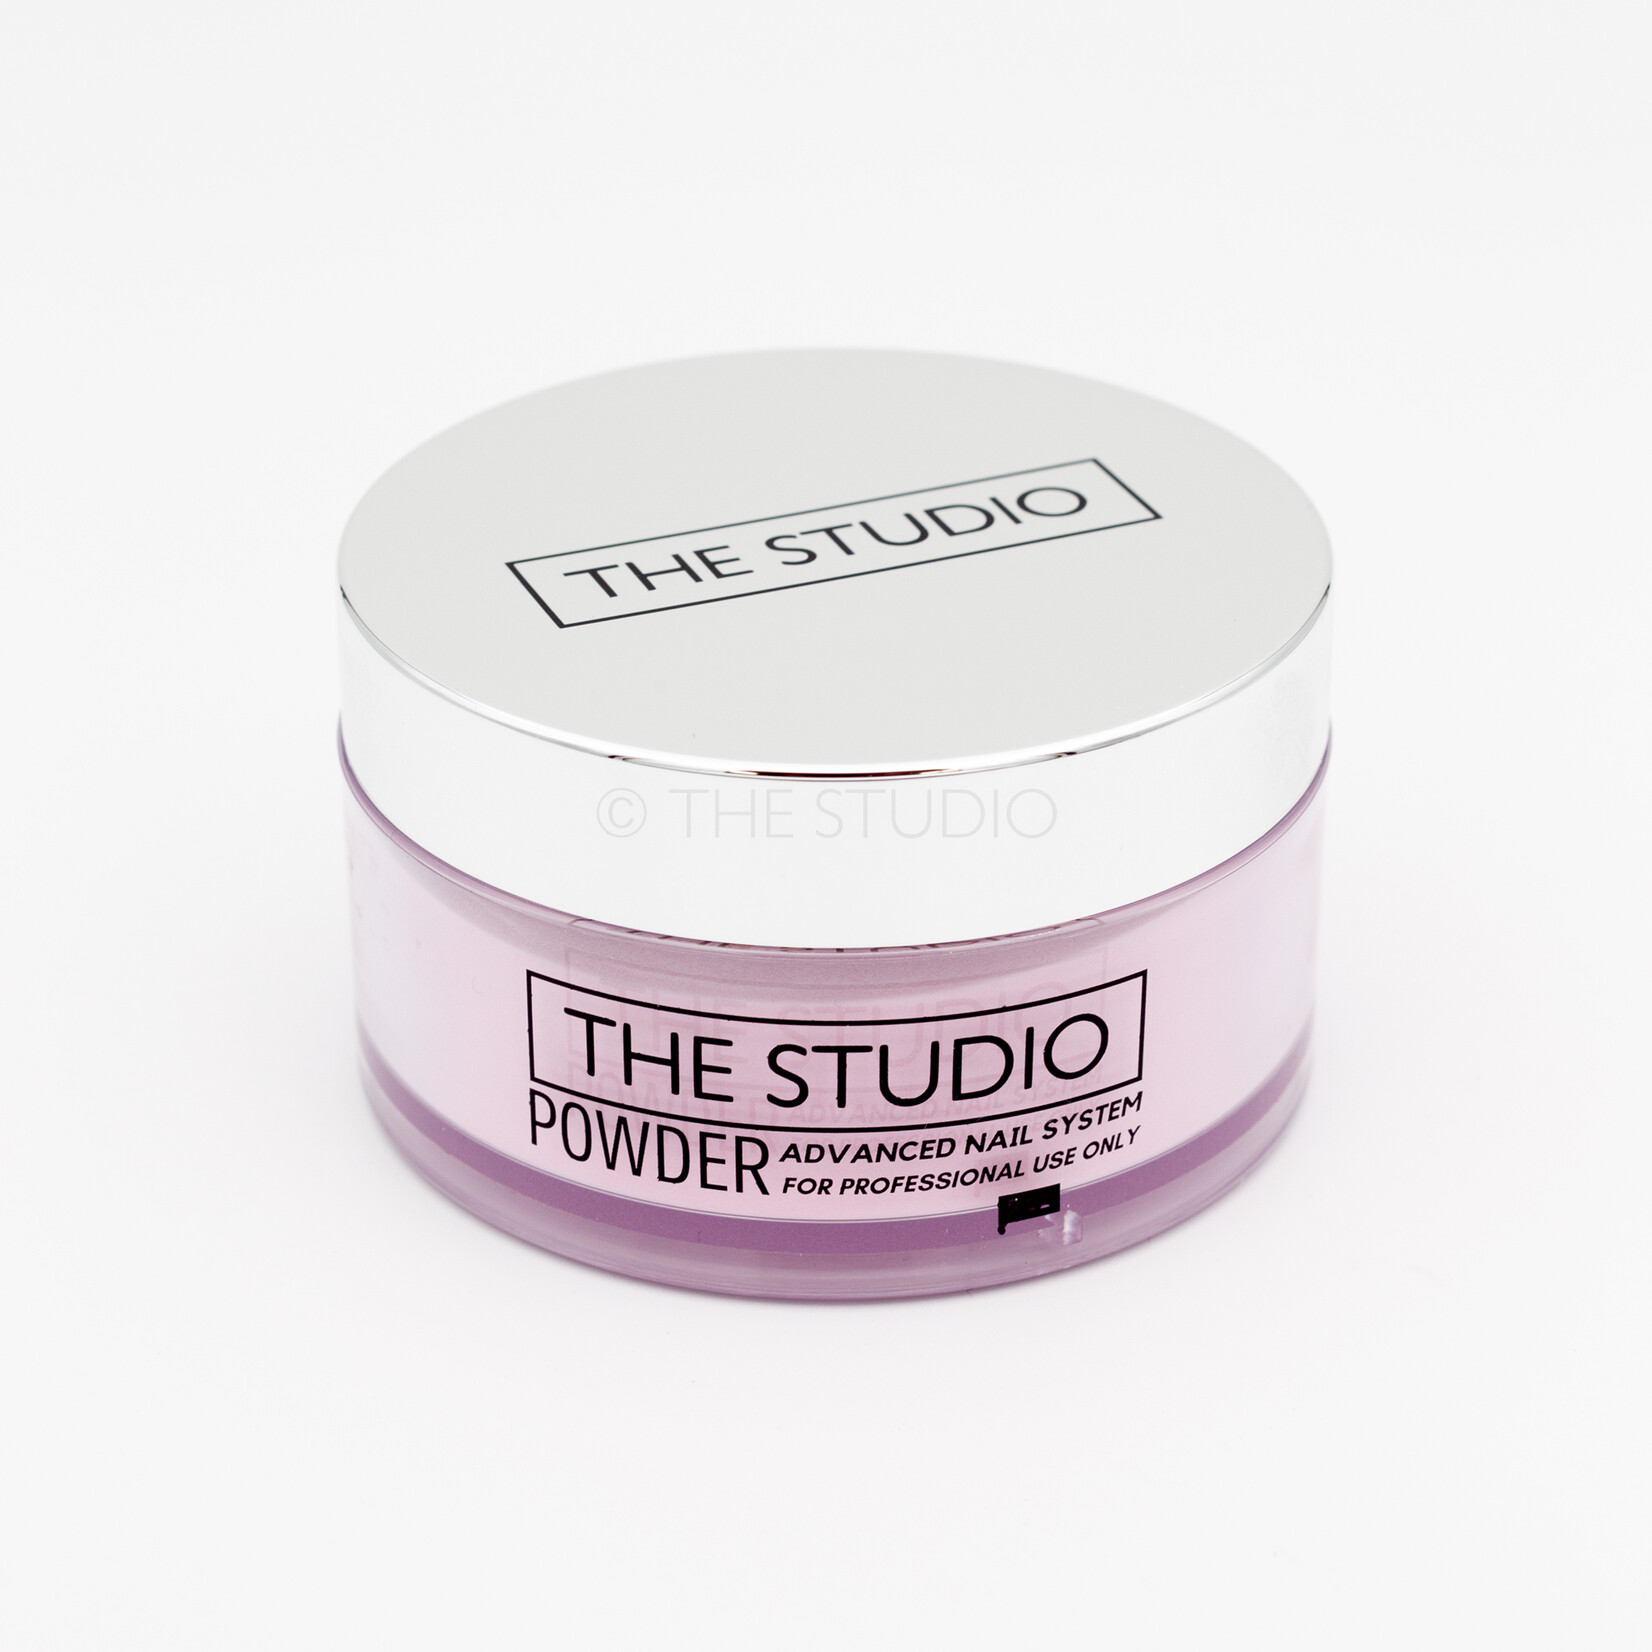 The Studio The Studio - Acrylic Powder - Cotton Candy Pink -